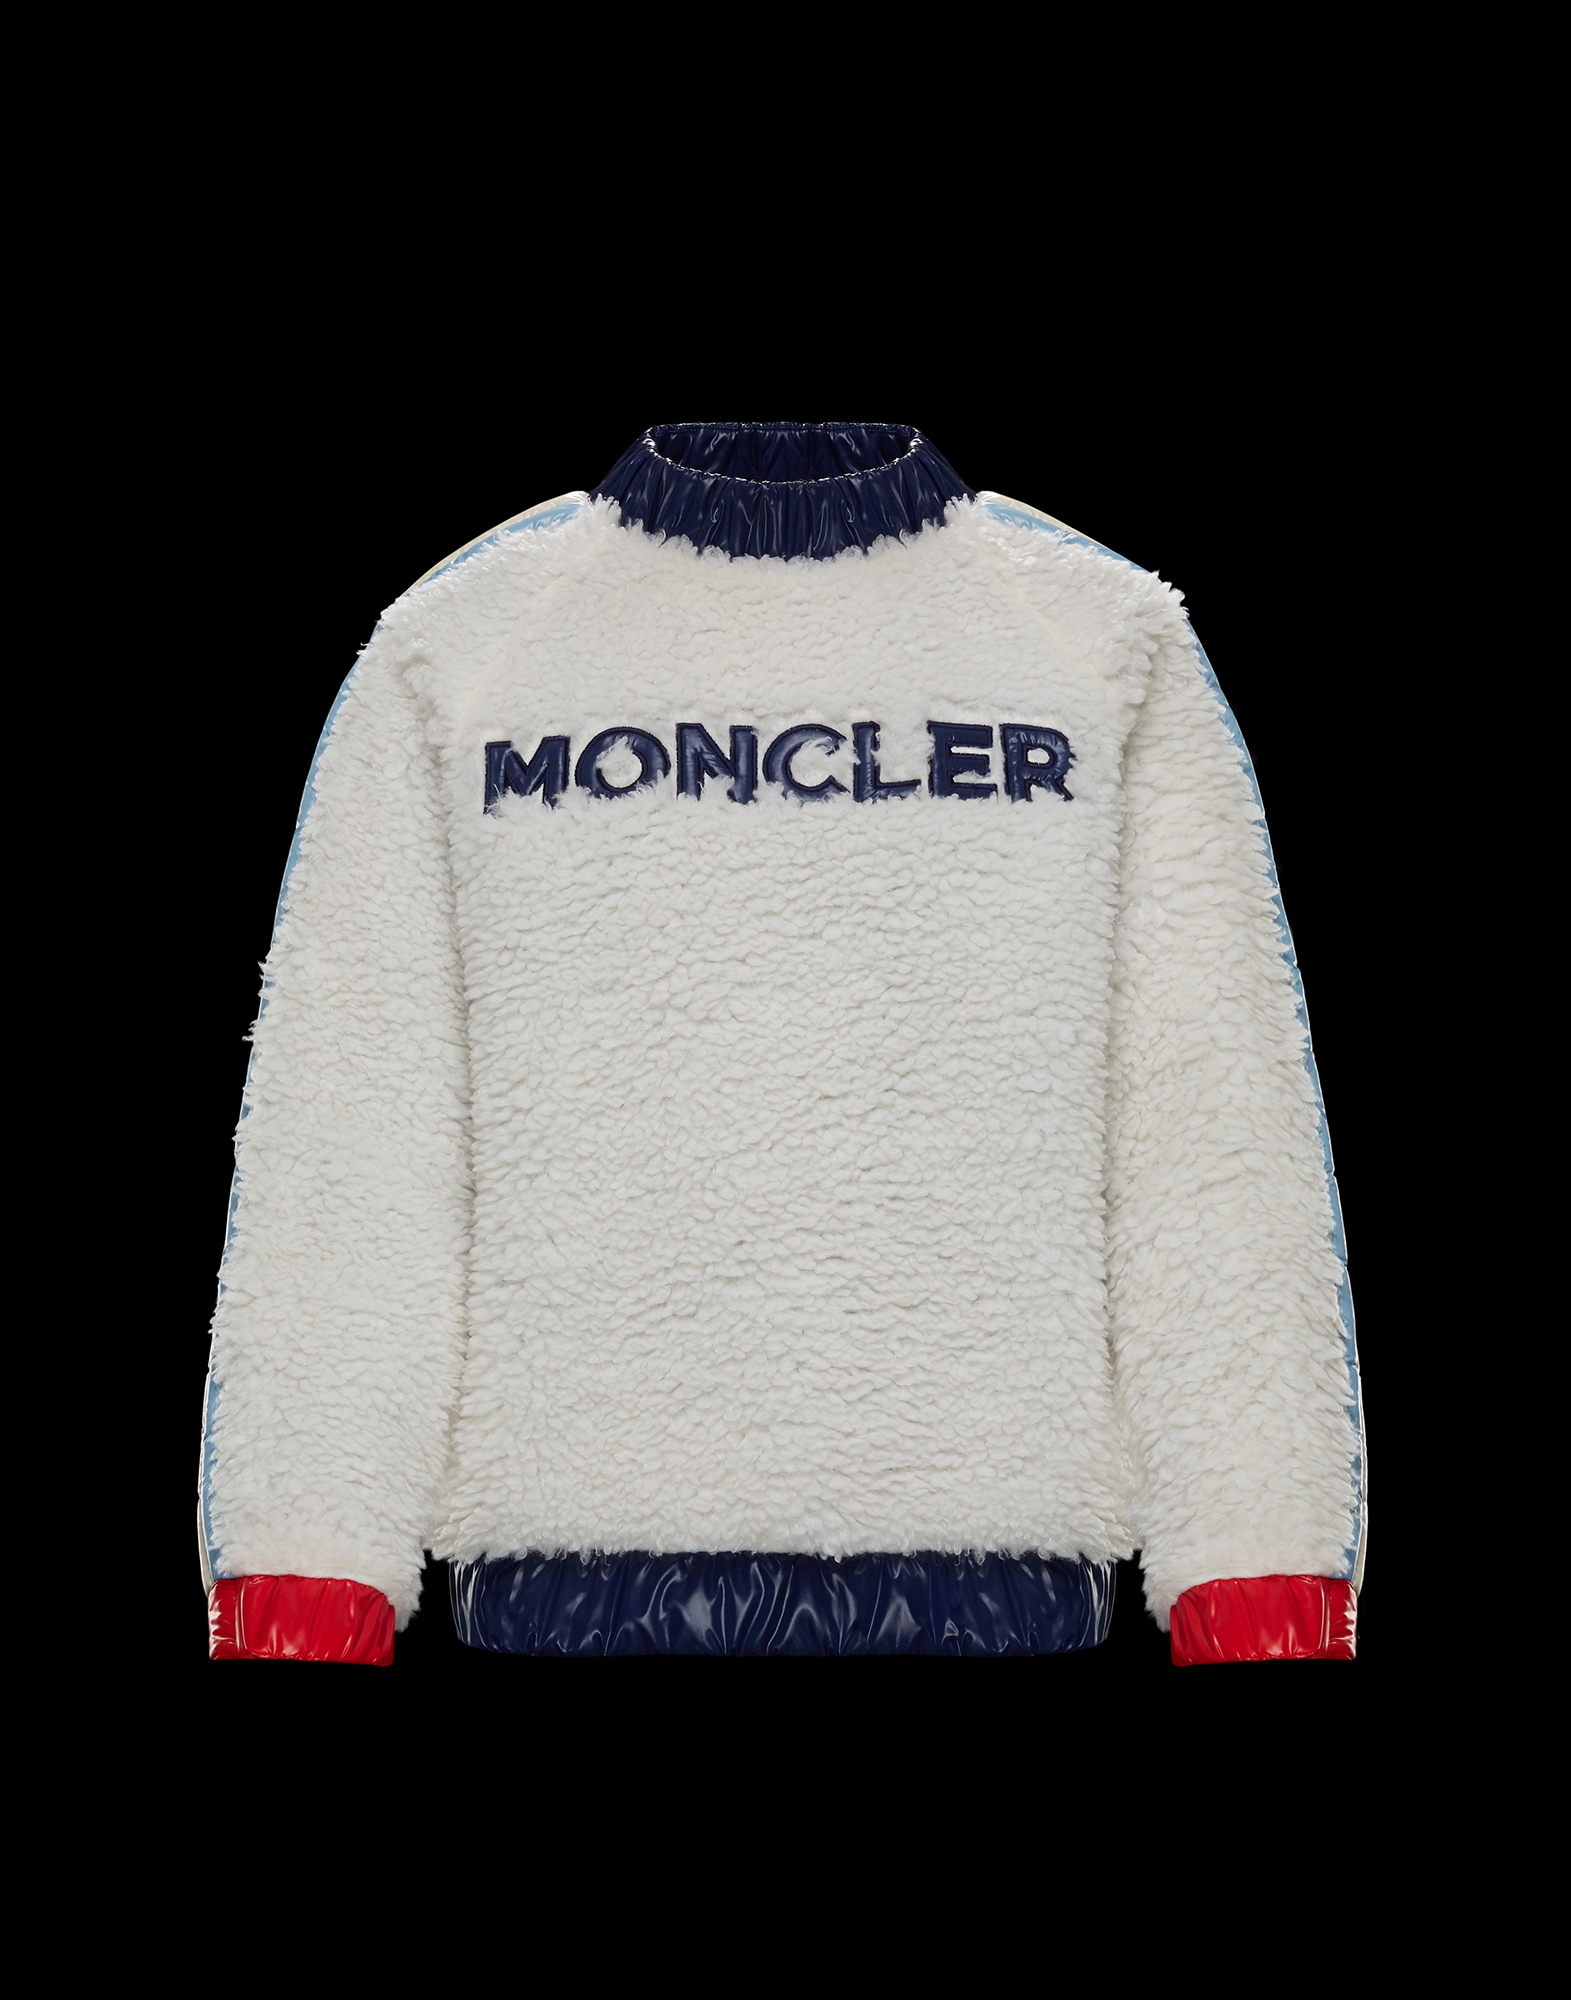 moncler womens sweatshirt